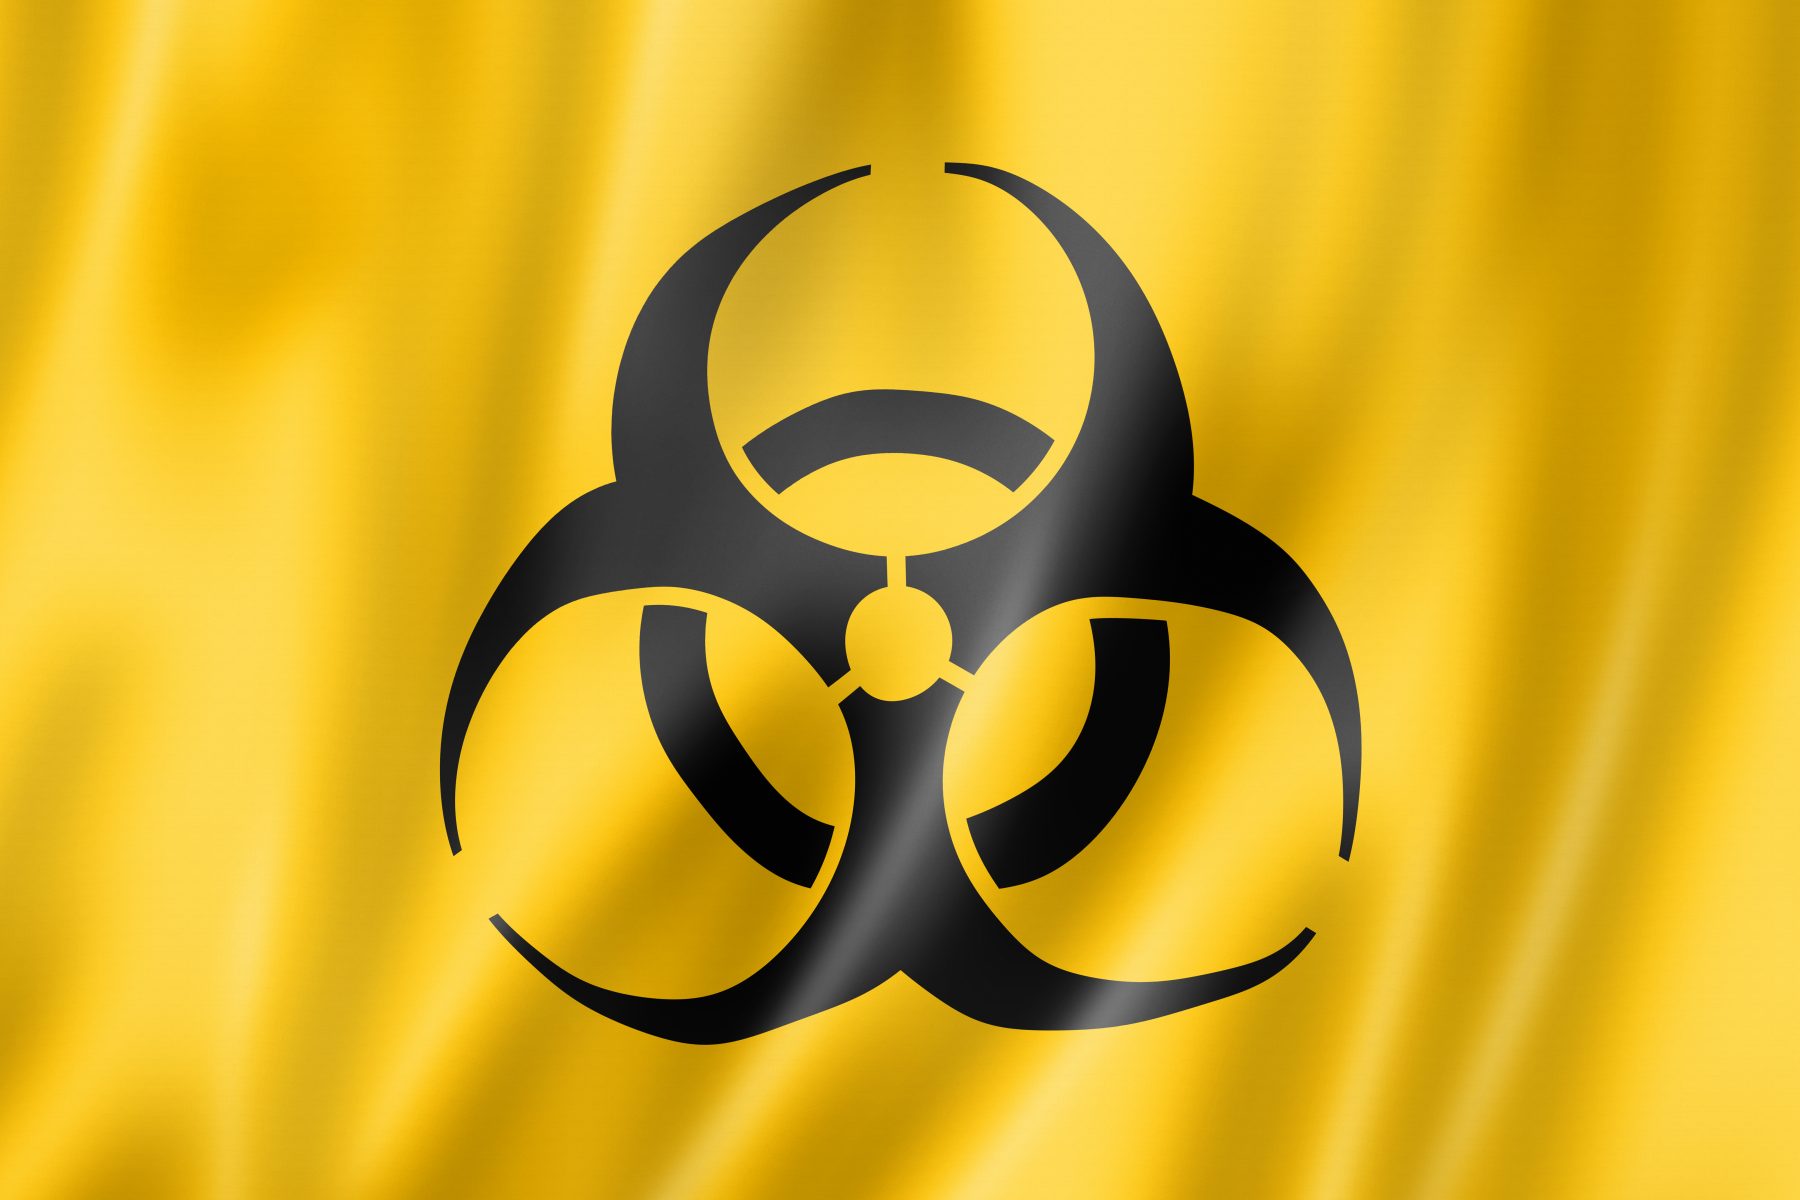 Biohazard flag